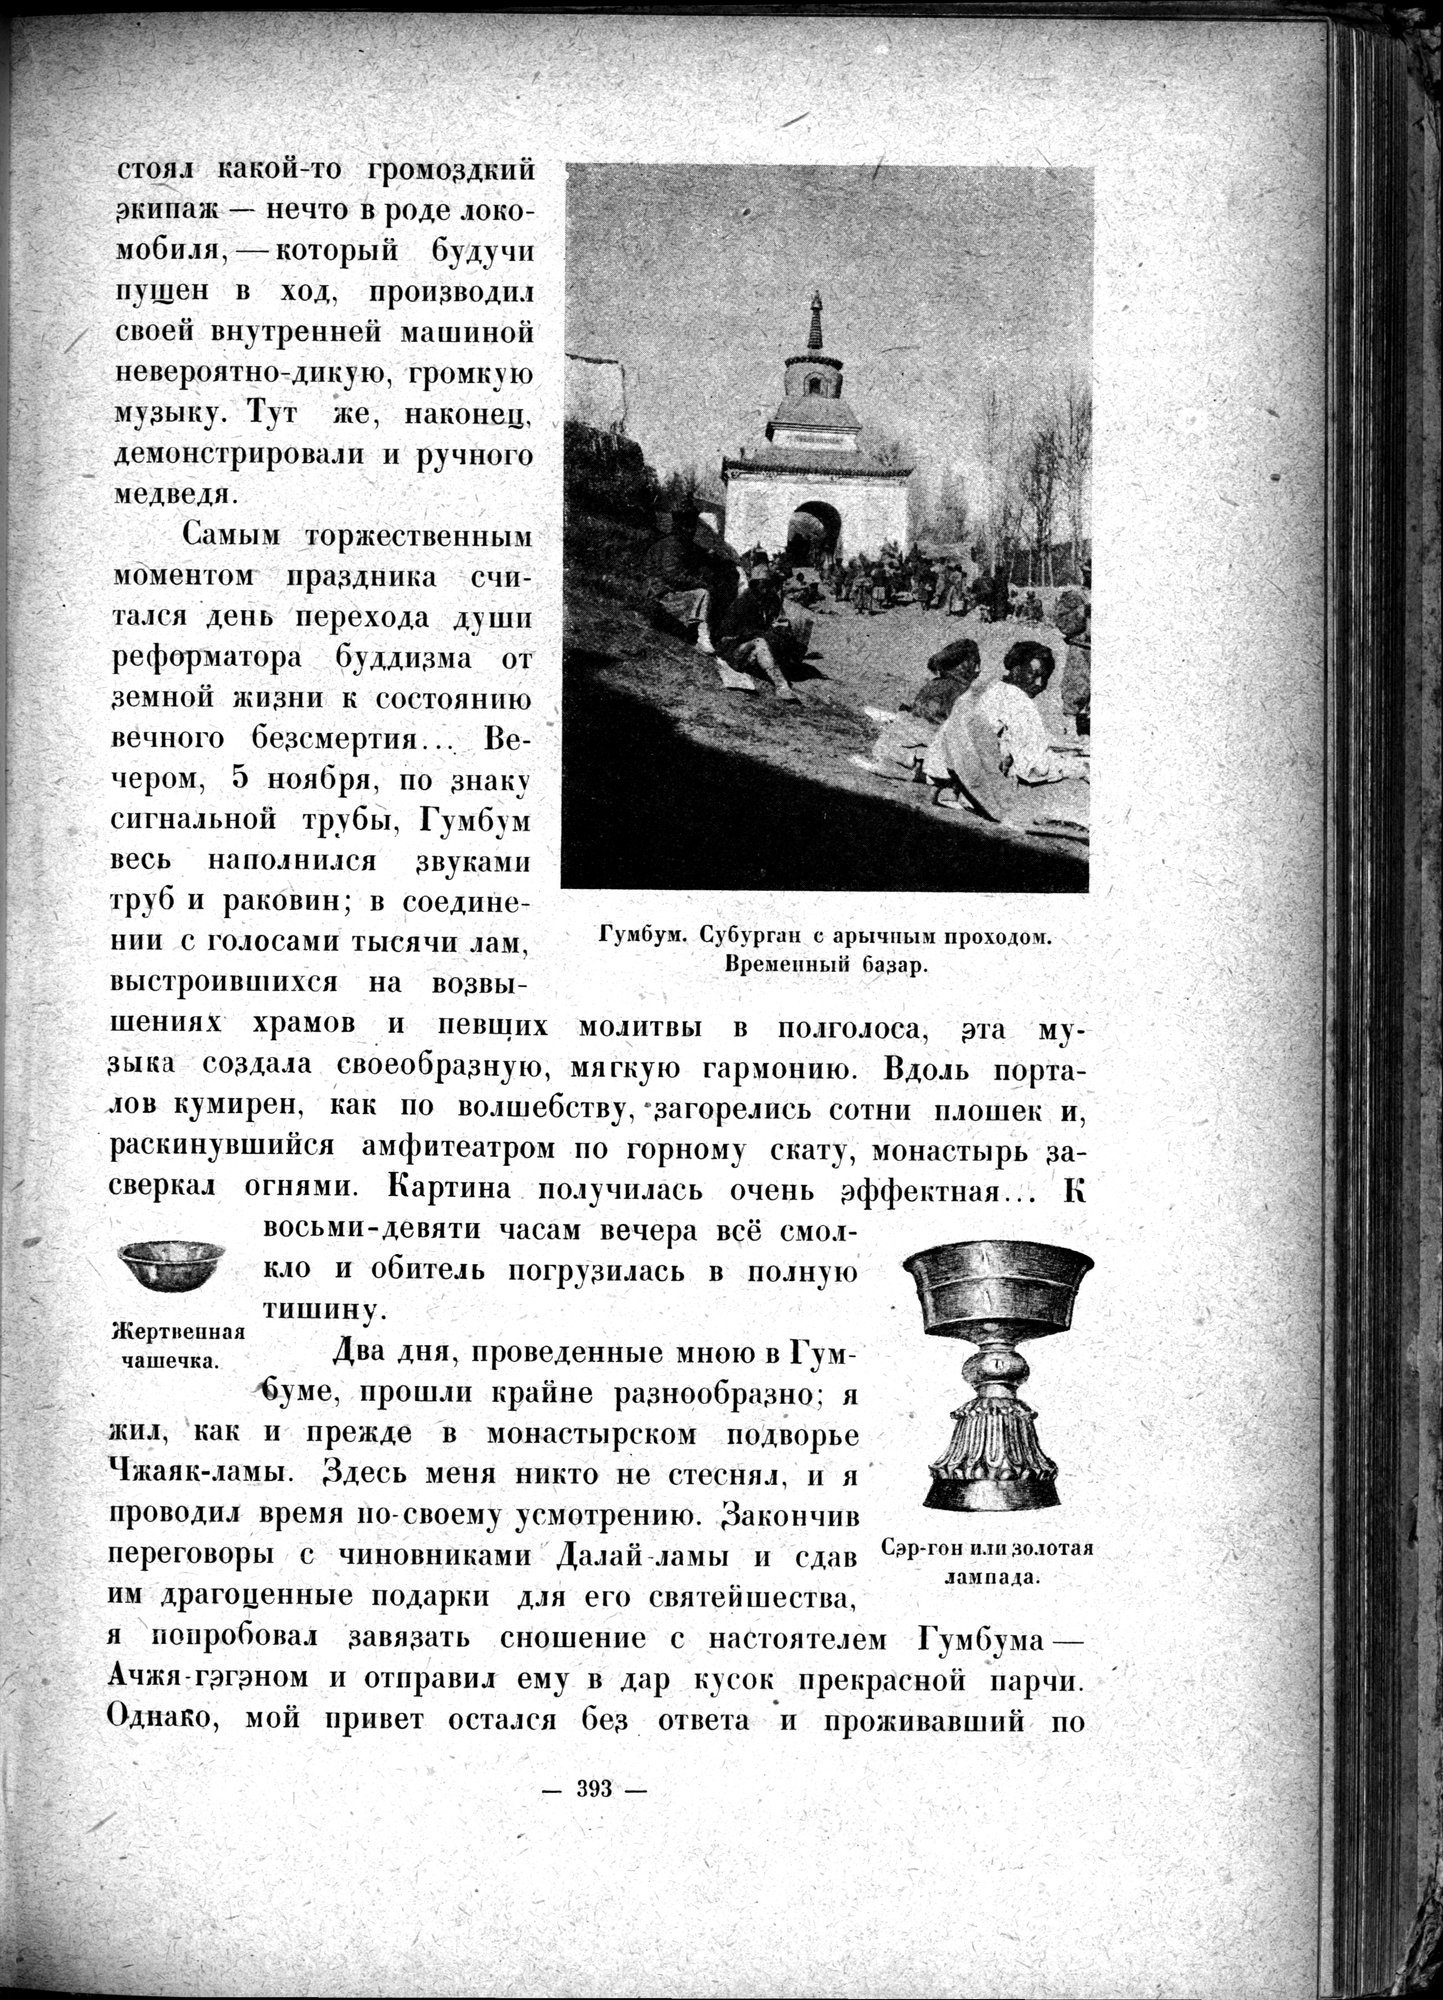 Mongoliya i Amdo i mertby gorod Khara-Khoto : vol.1 / Page 447 (Grayscale High Resolution Image)